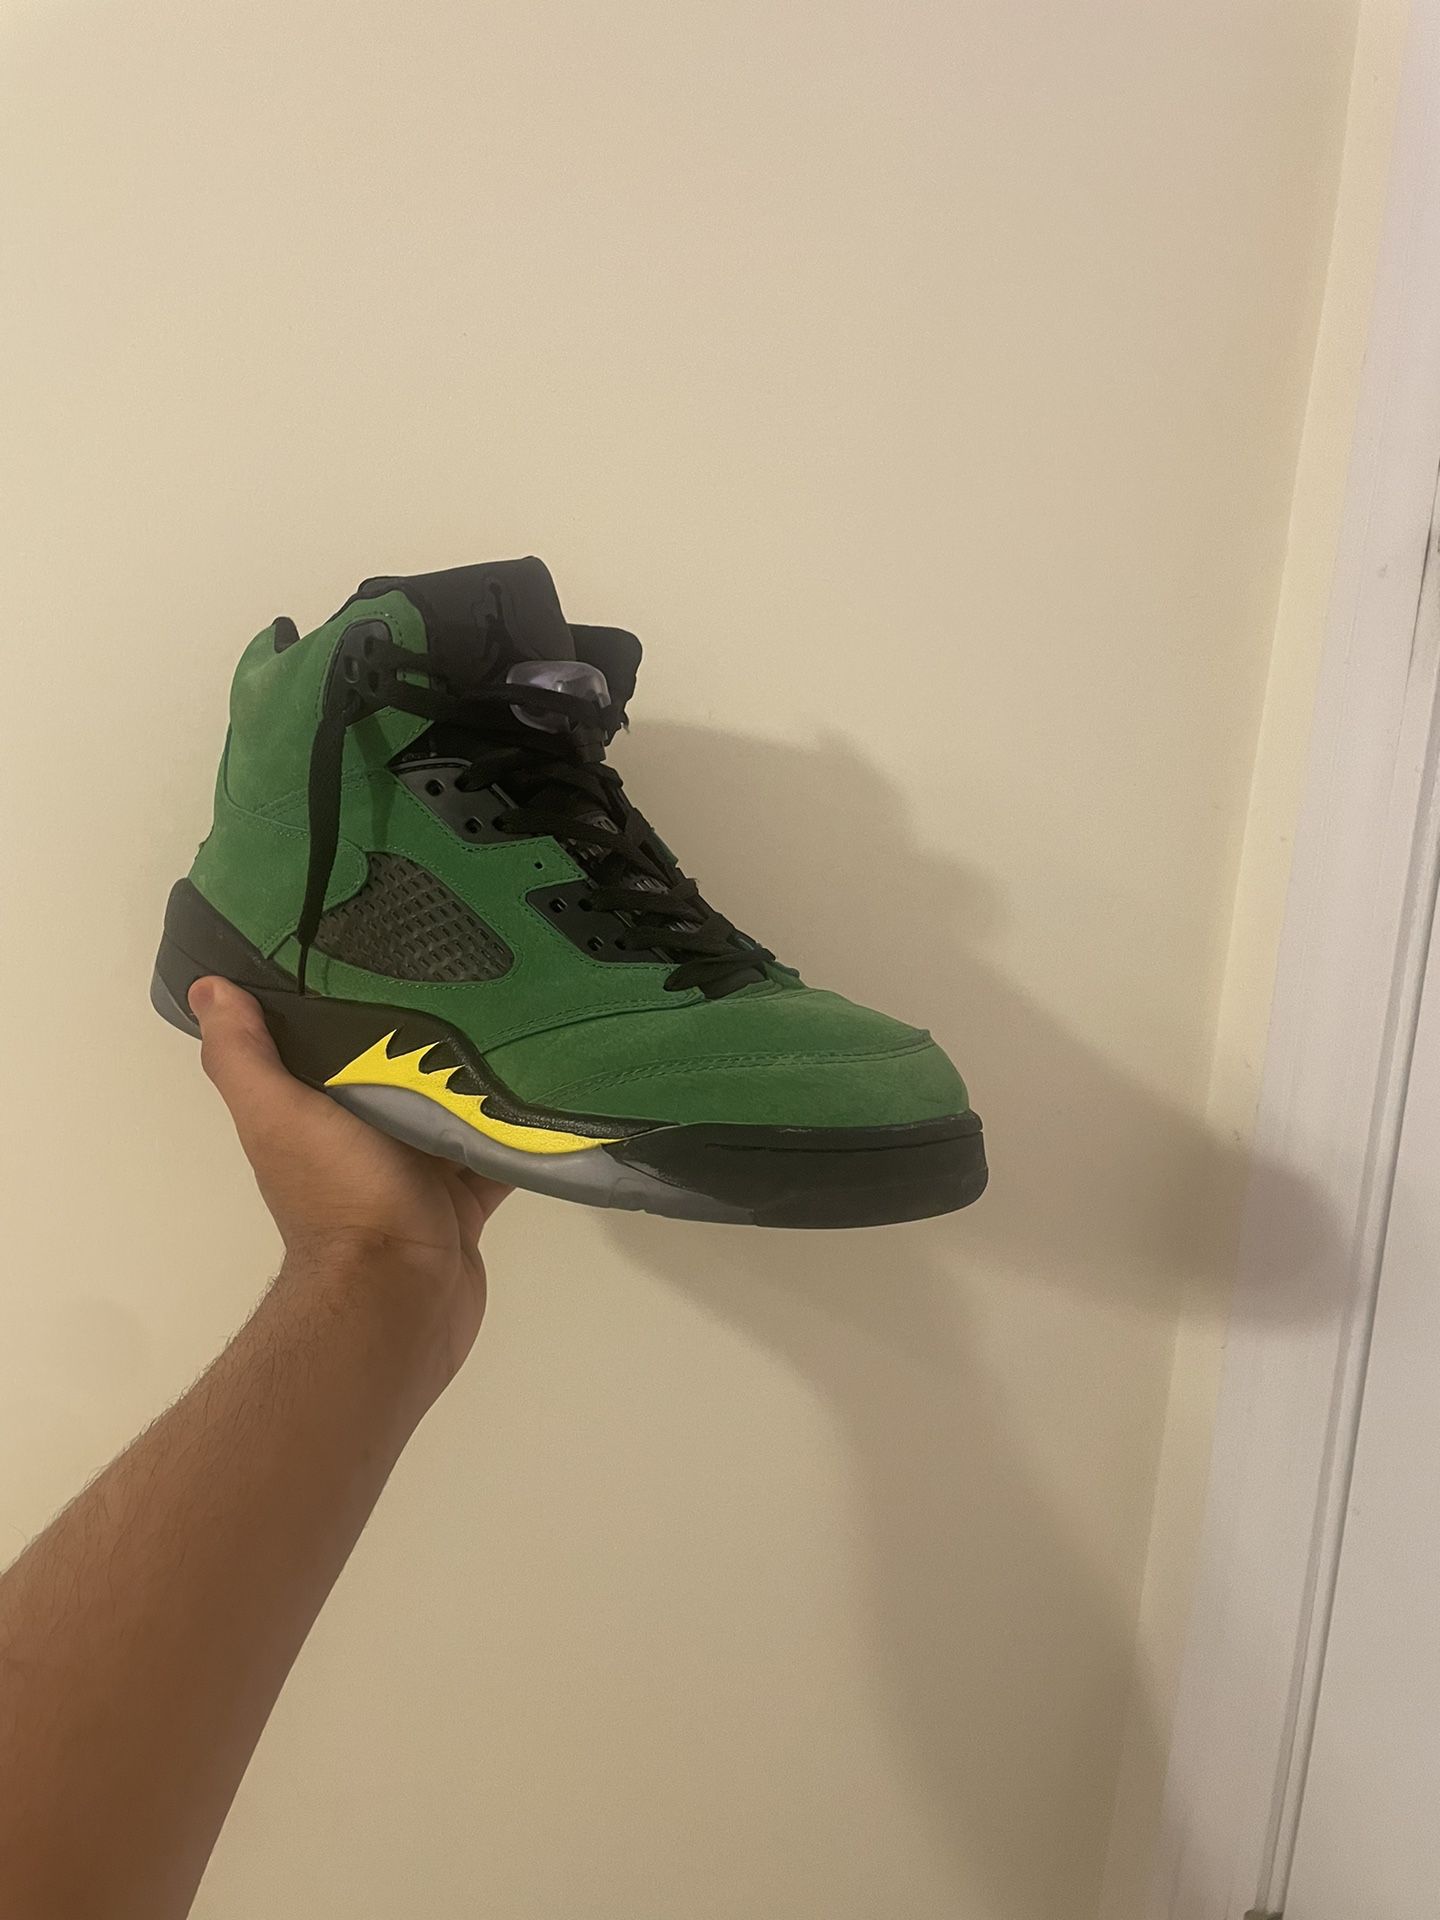 Jordan 5s Green Glow 